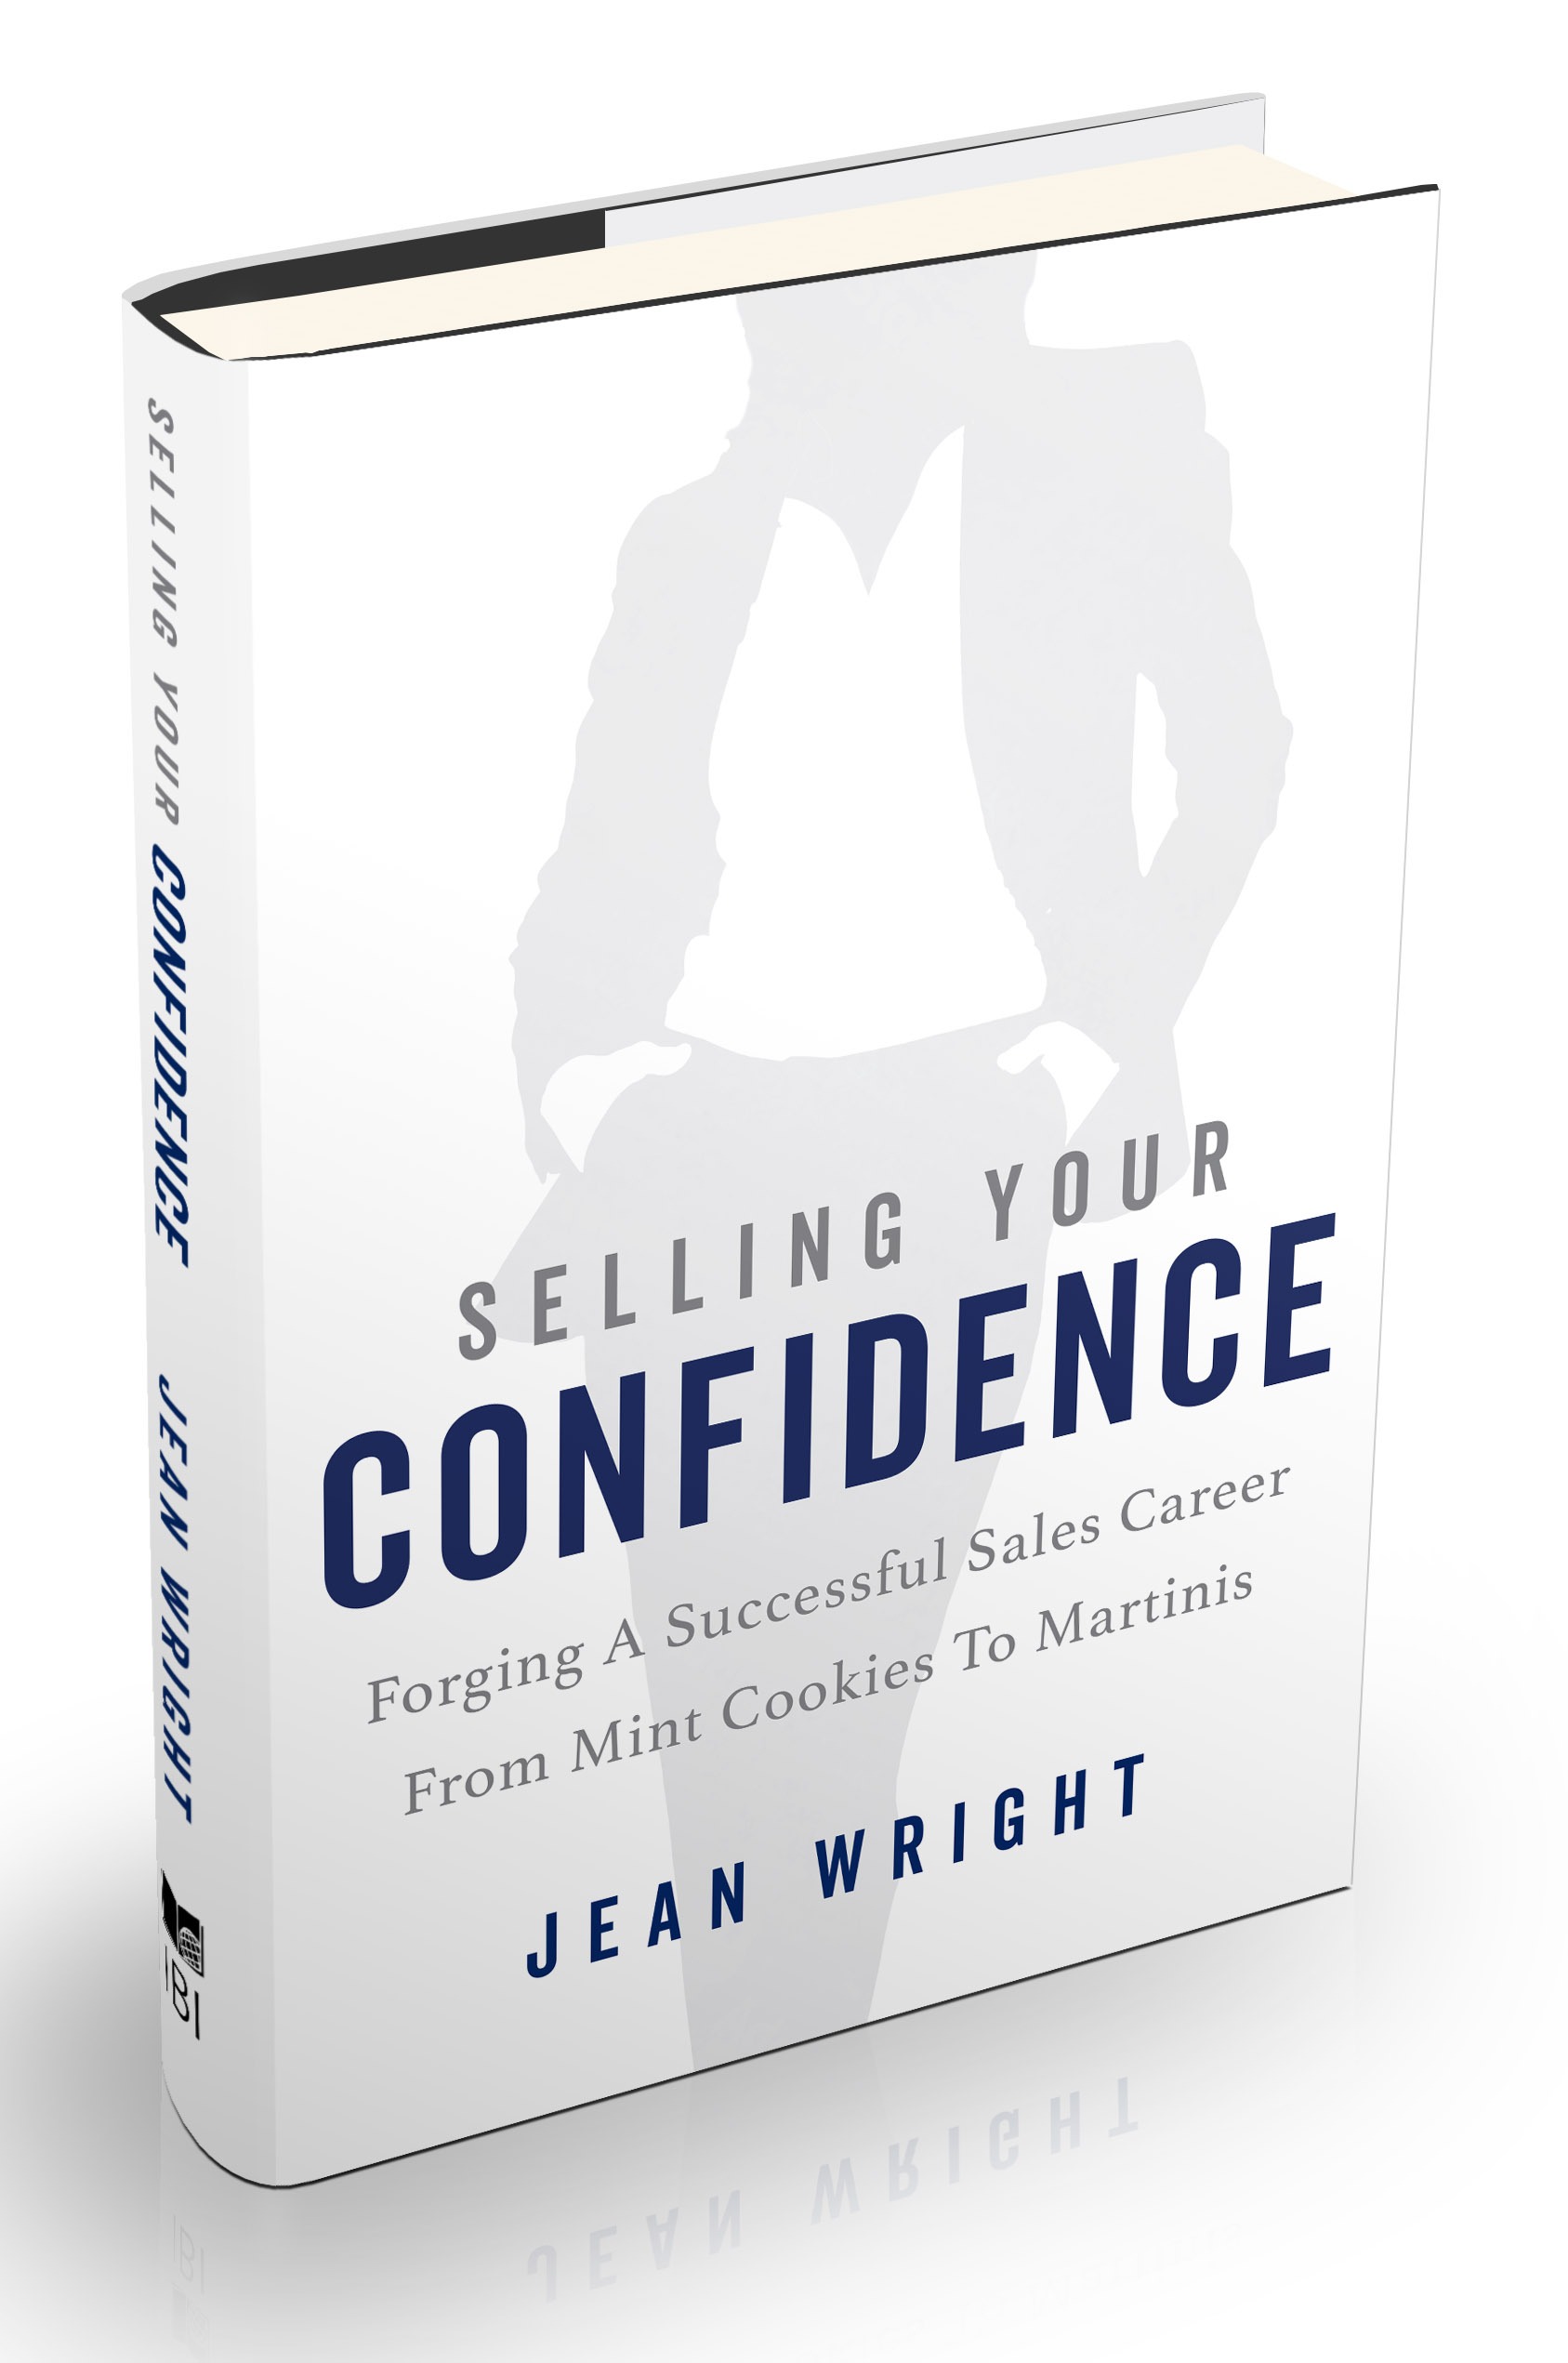 SellingConfidence 3d 2 1